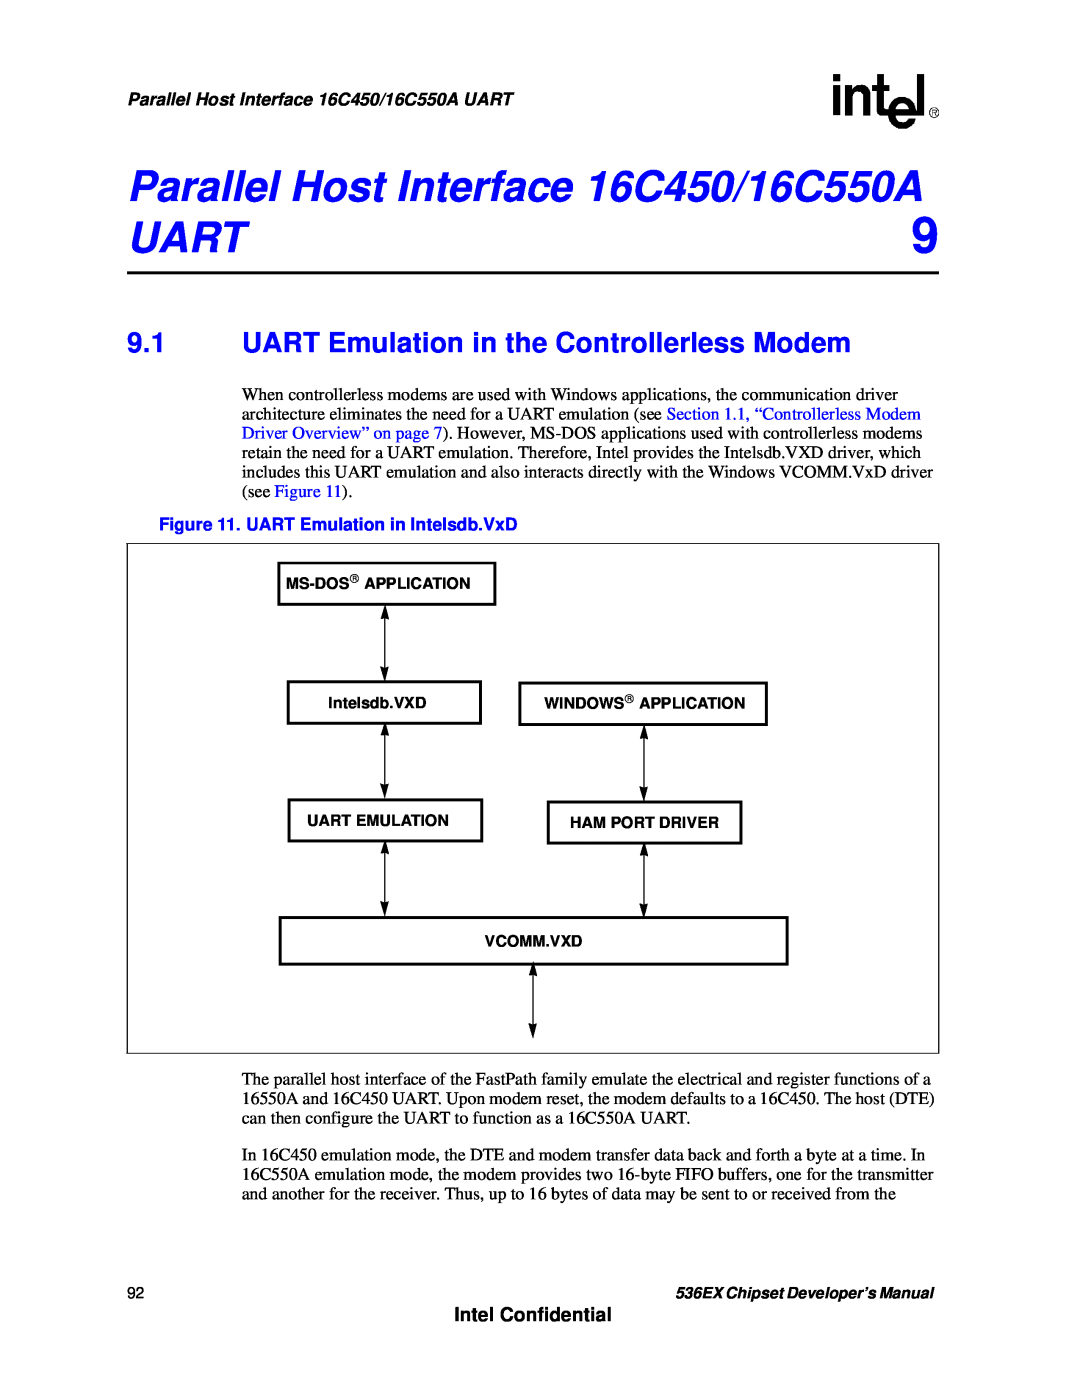 Intel 536EX Uart, Intel Confidential, Parallel Host Interface 16C450/16C550A UART, UART Emulation in Intelsdb.VxD 